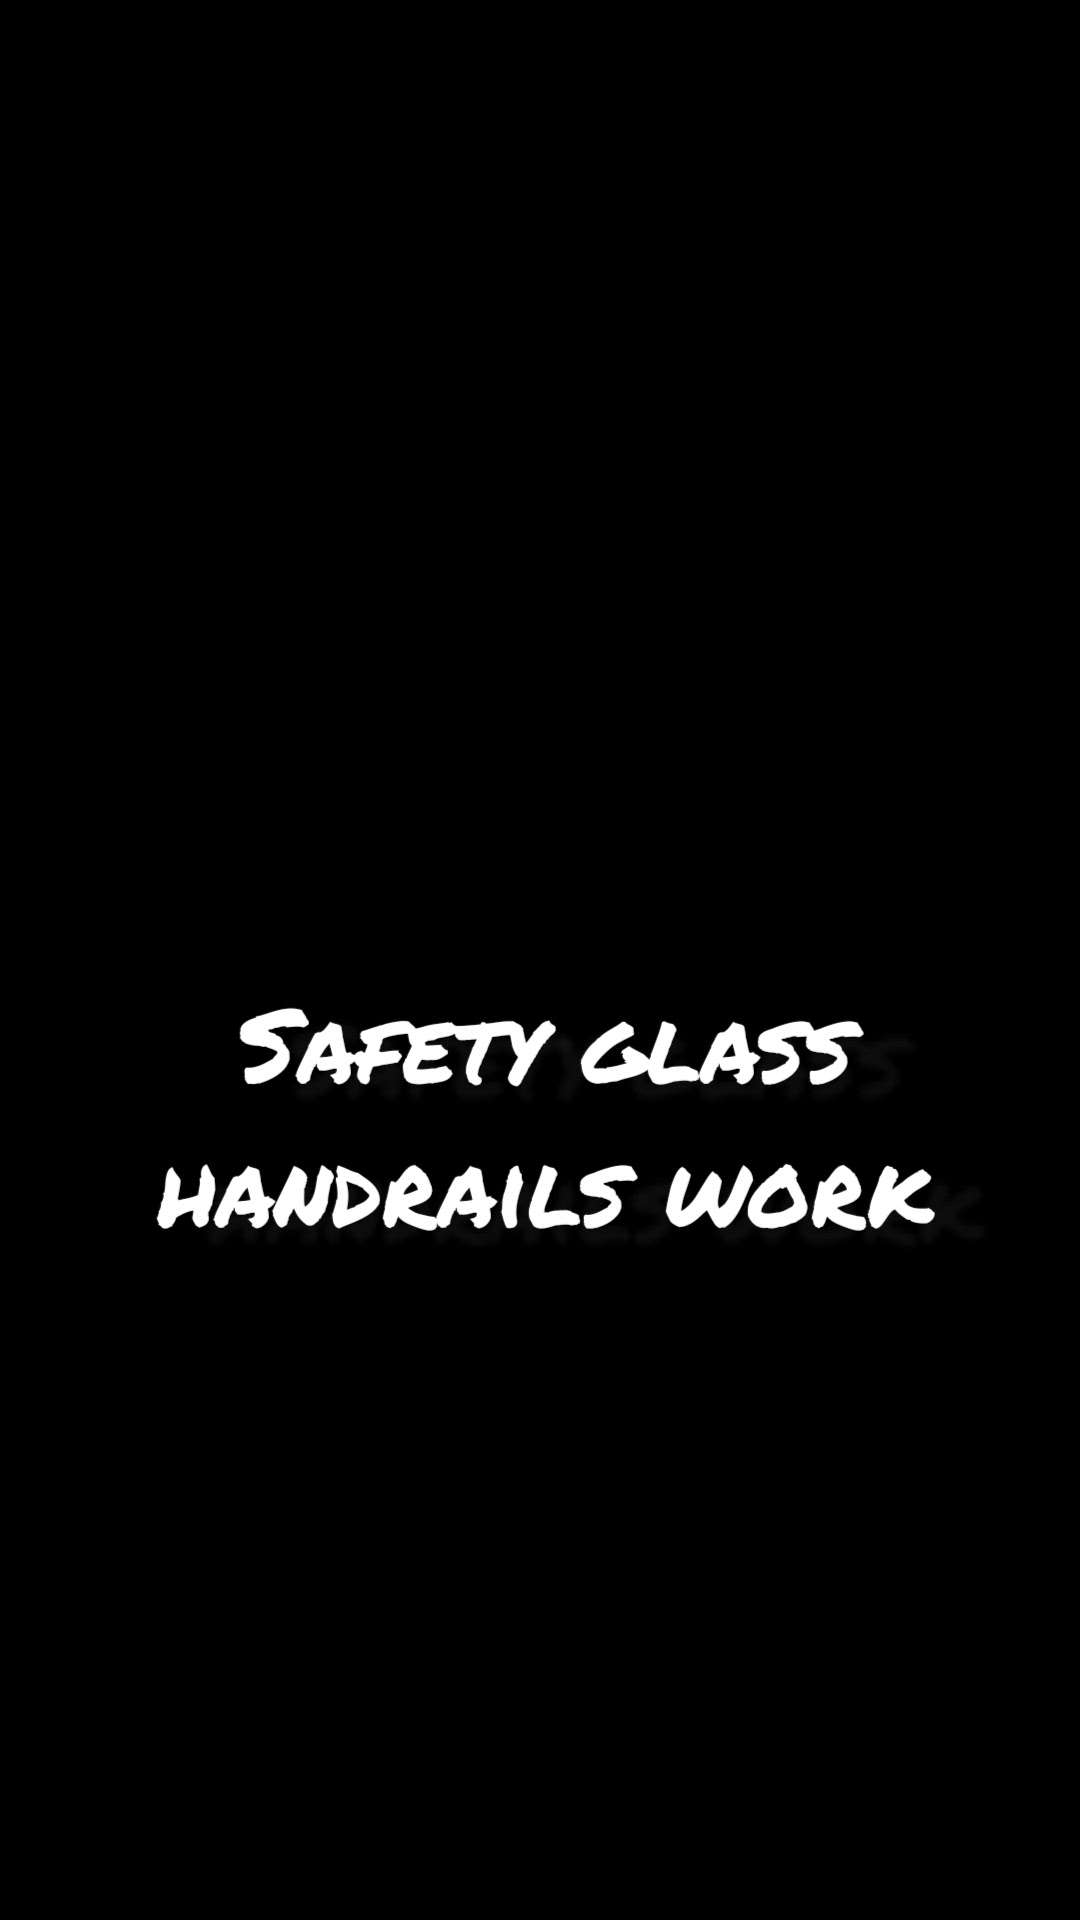 safety glass handrails work#site kadachira, kannur#